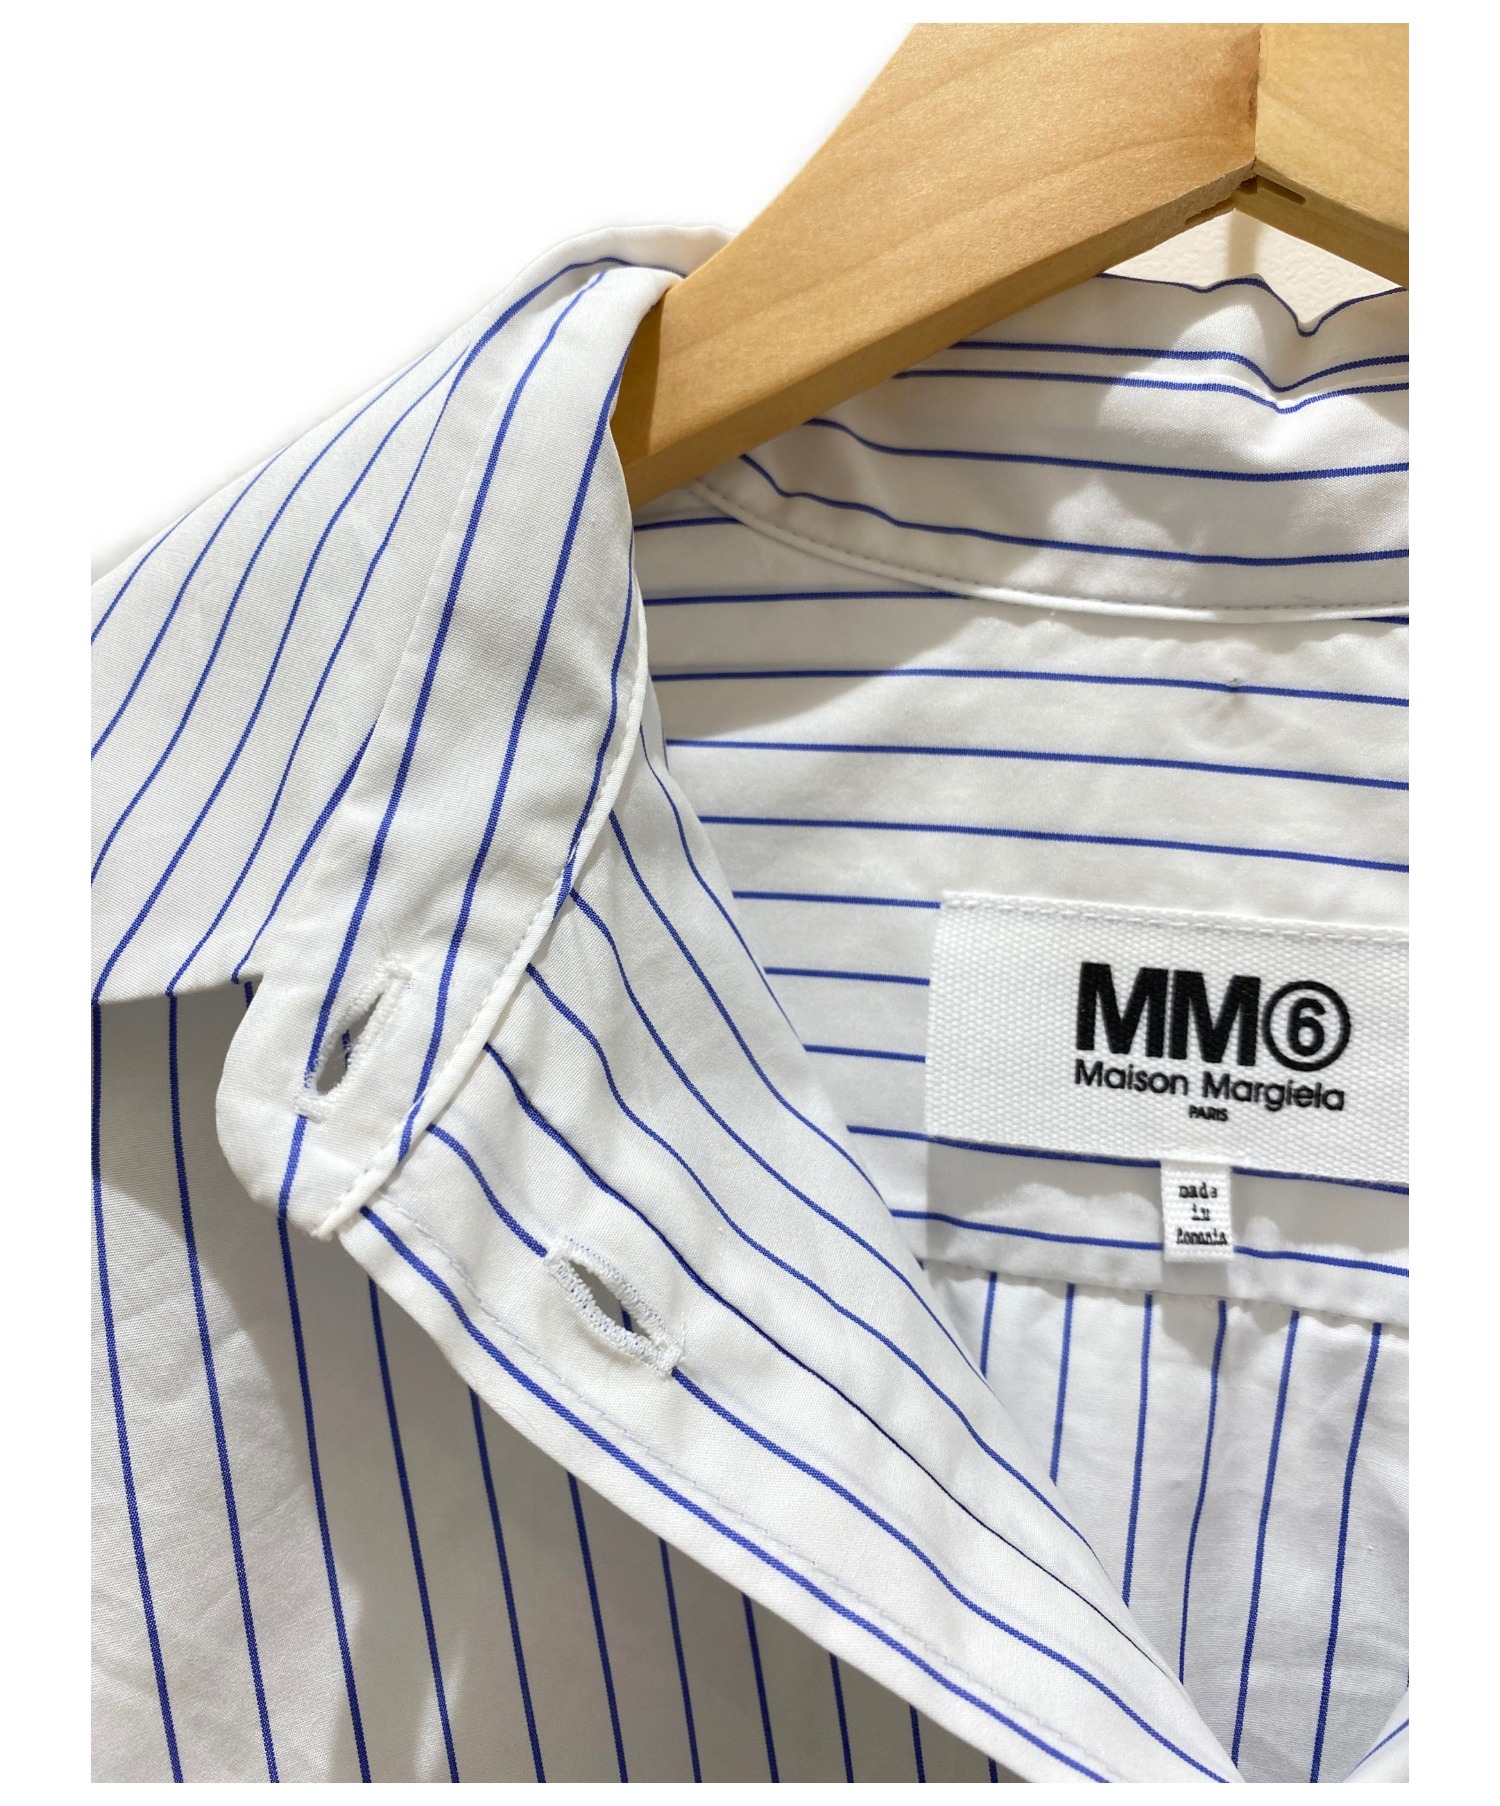 MM6 Maison Margiela (エムエムシックス メゾン マルジェラ) ボリュームスリーブストライプクロップドシャツ ホワイト サイズ:36